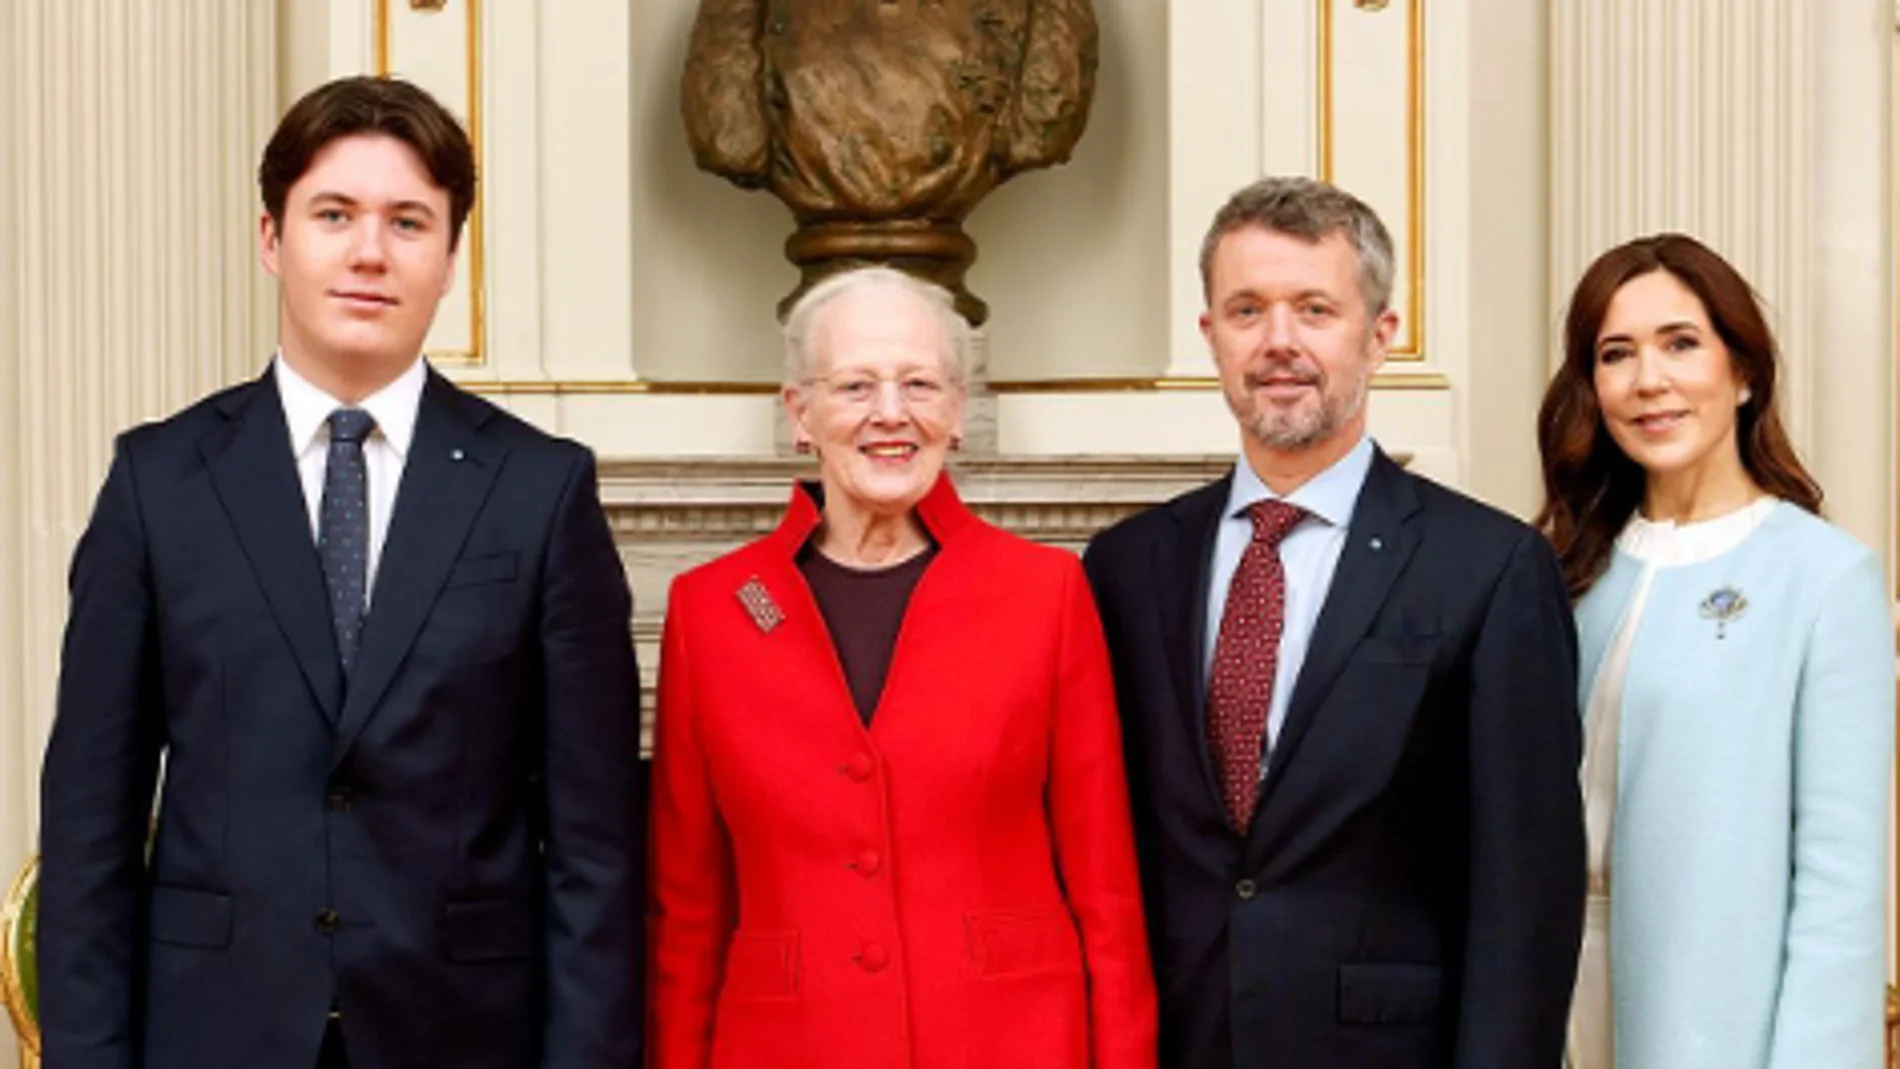 La estrategia de la Familia Real de Dinamarca para evadir la polémica